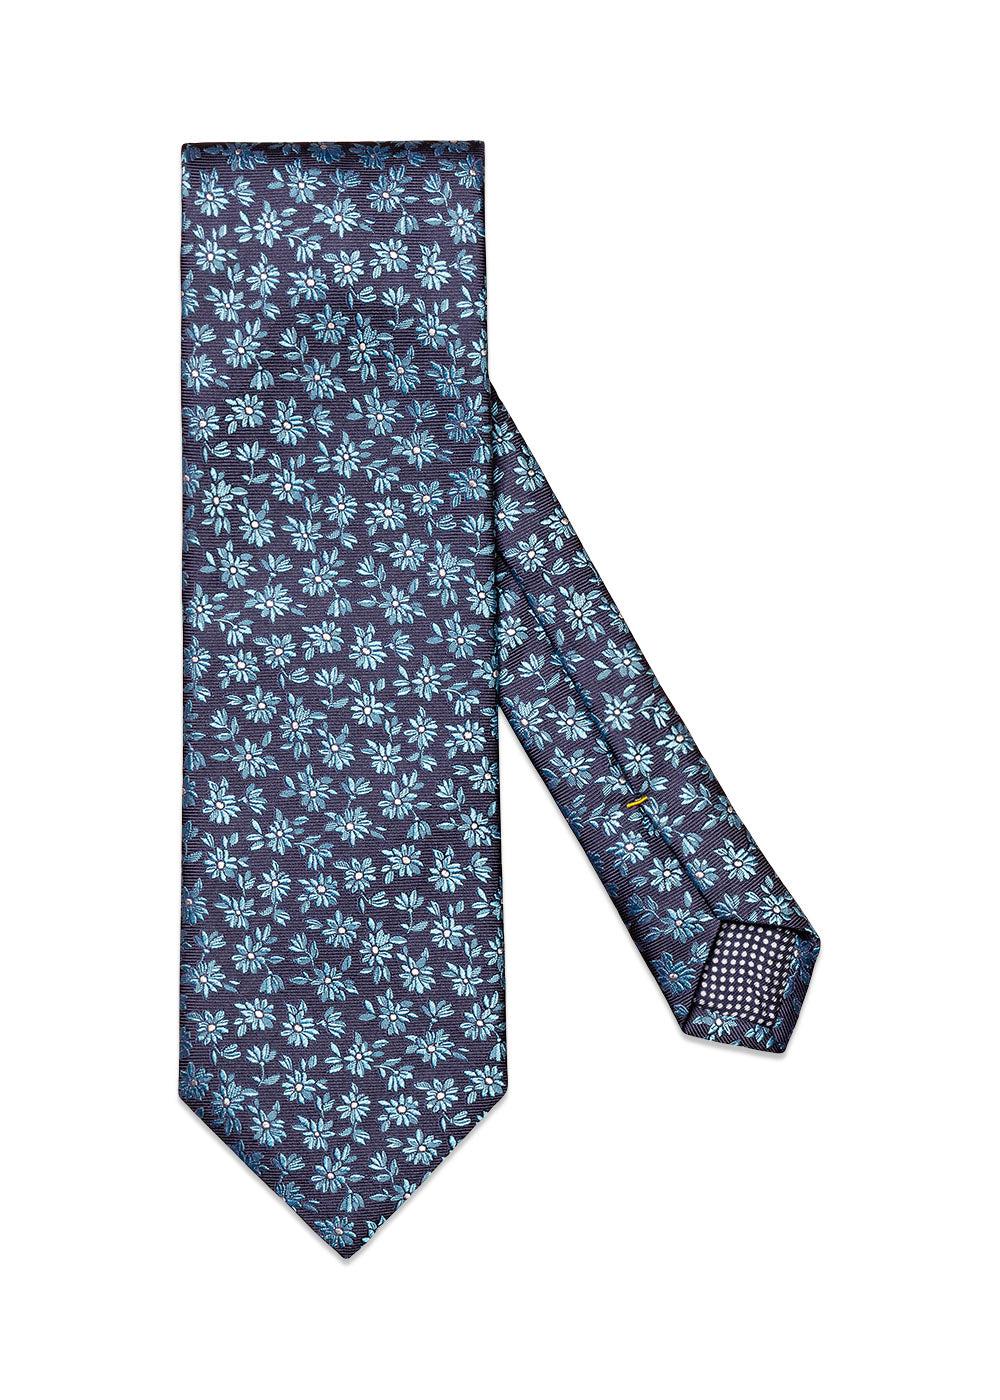 Etons Silk Tie Floral - Navy Blue. Køb accessories her.